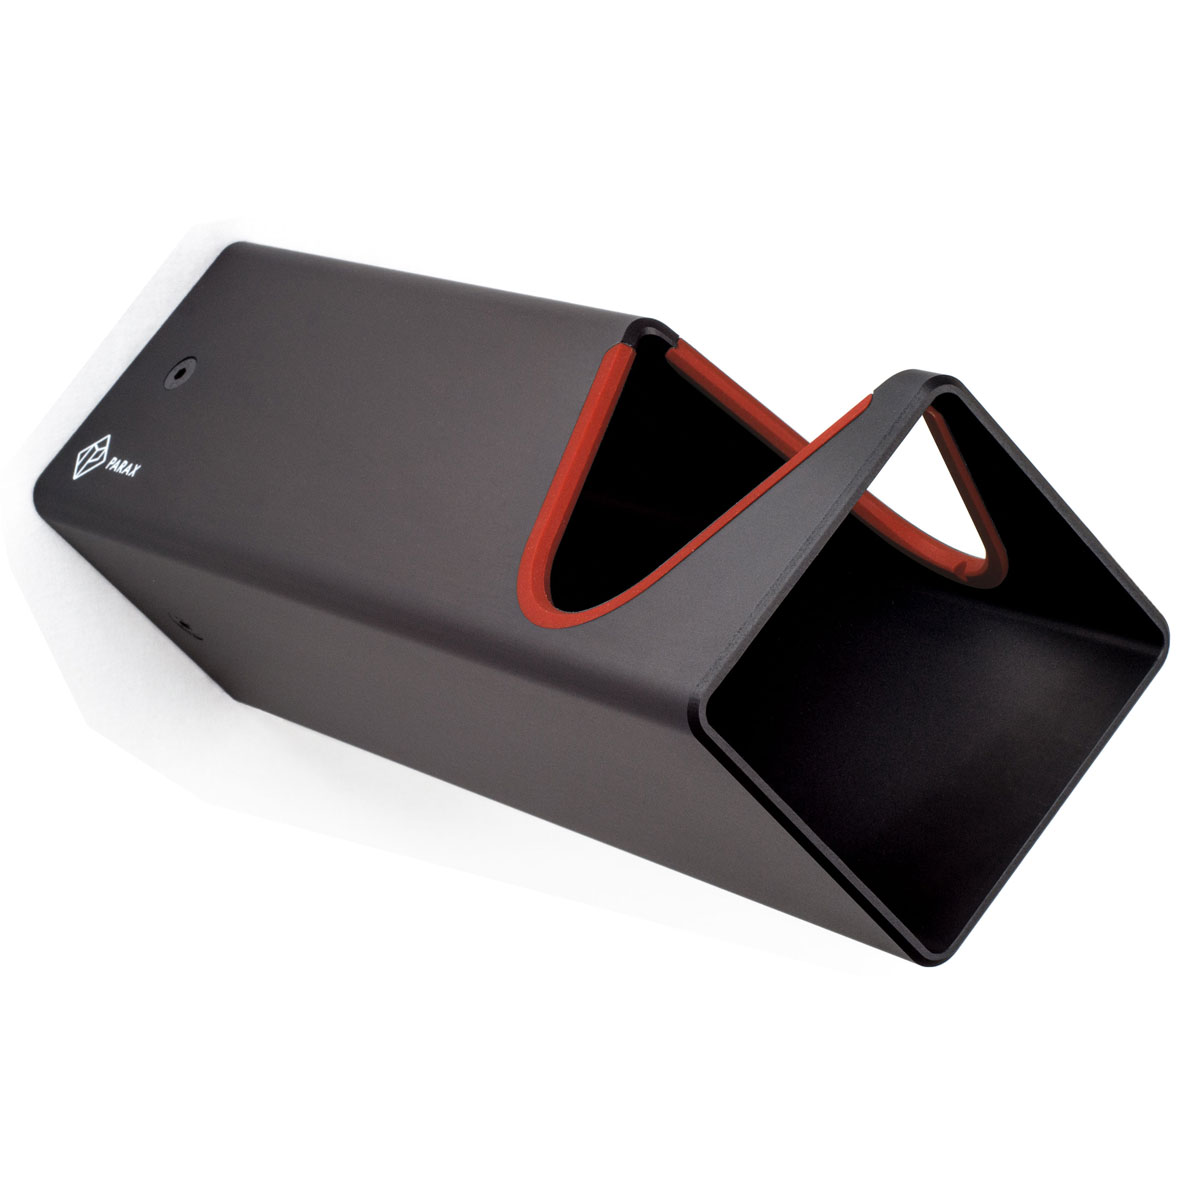 Productfoto van Parax D-Rack Muurbeugel - Black - Red - without Wooden Front